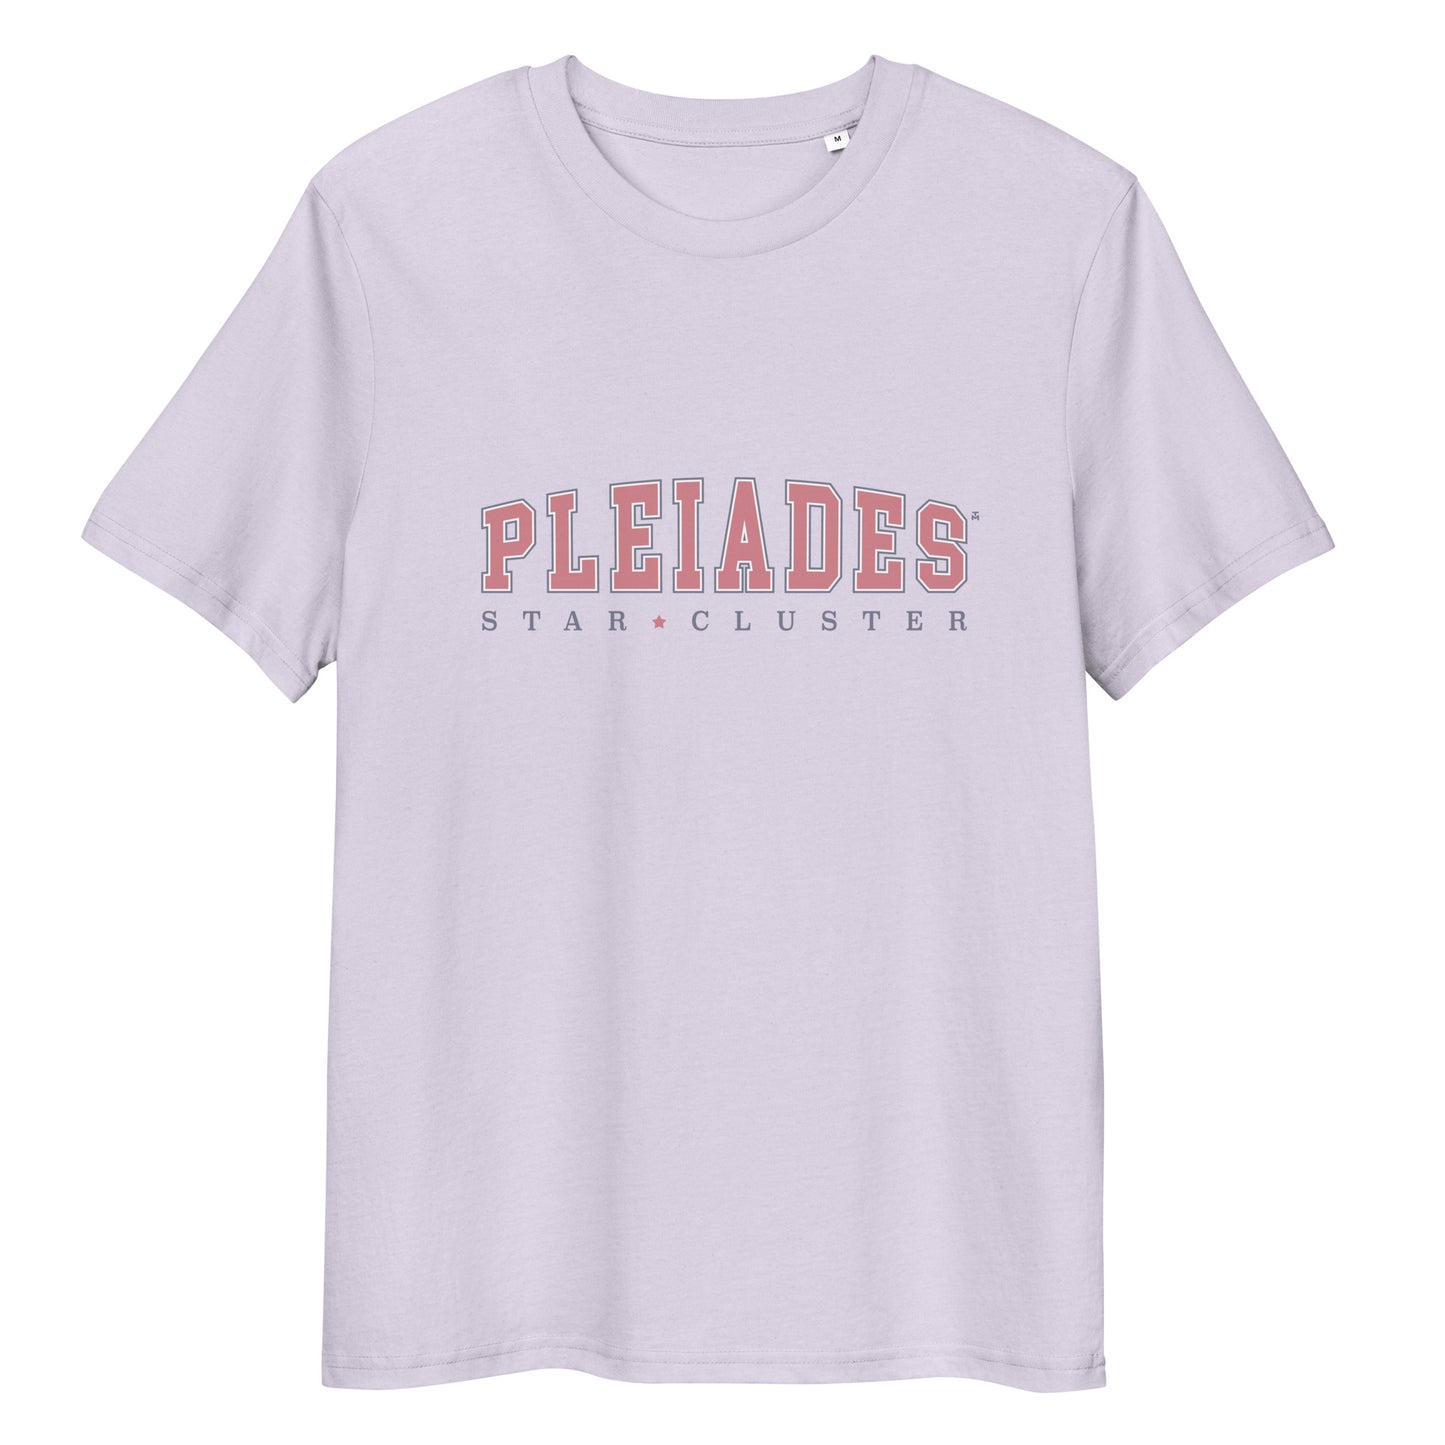 Pleiades Star Cluster T-Shirt 100% Organic Cotton